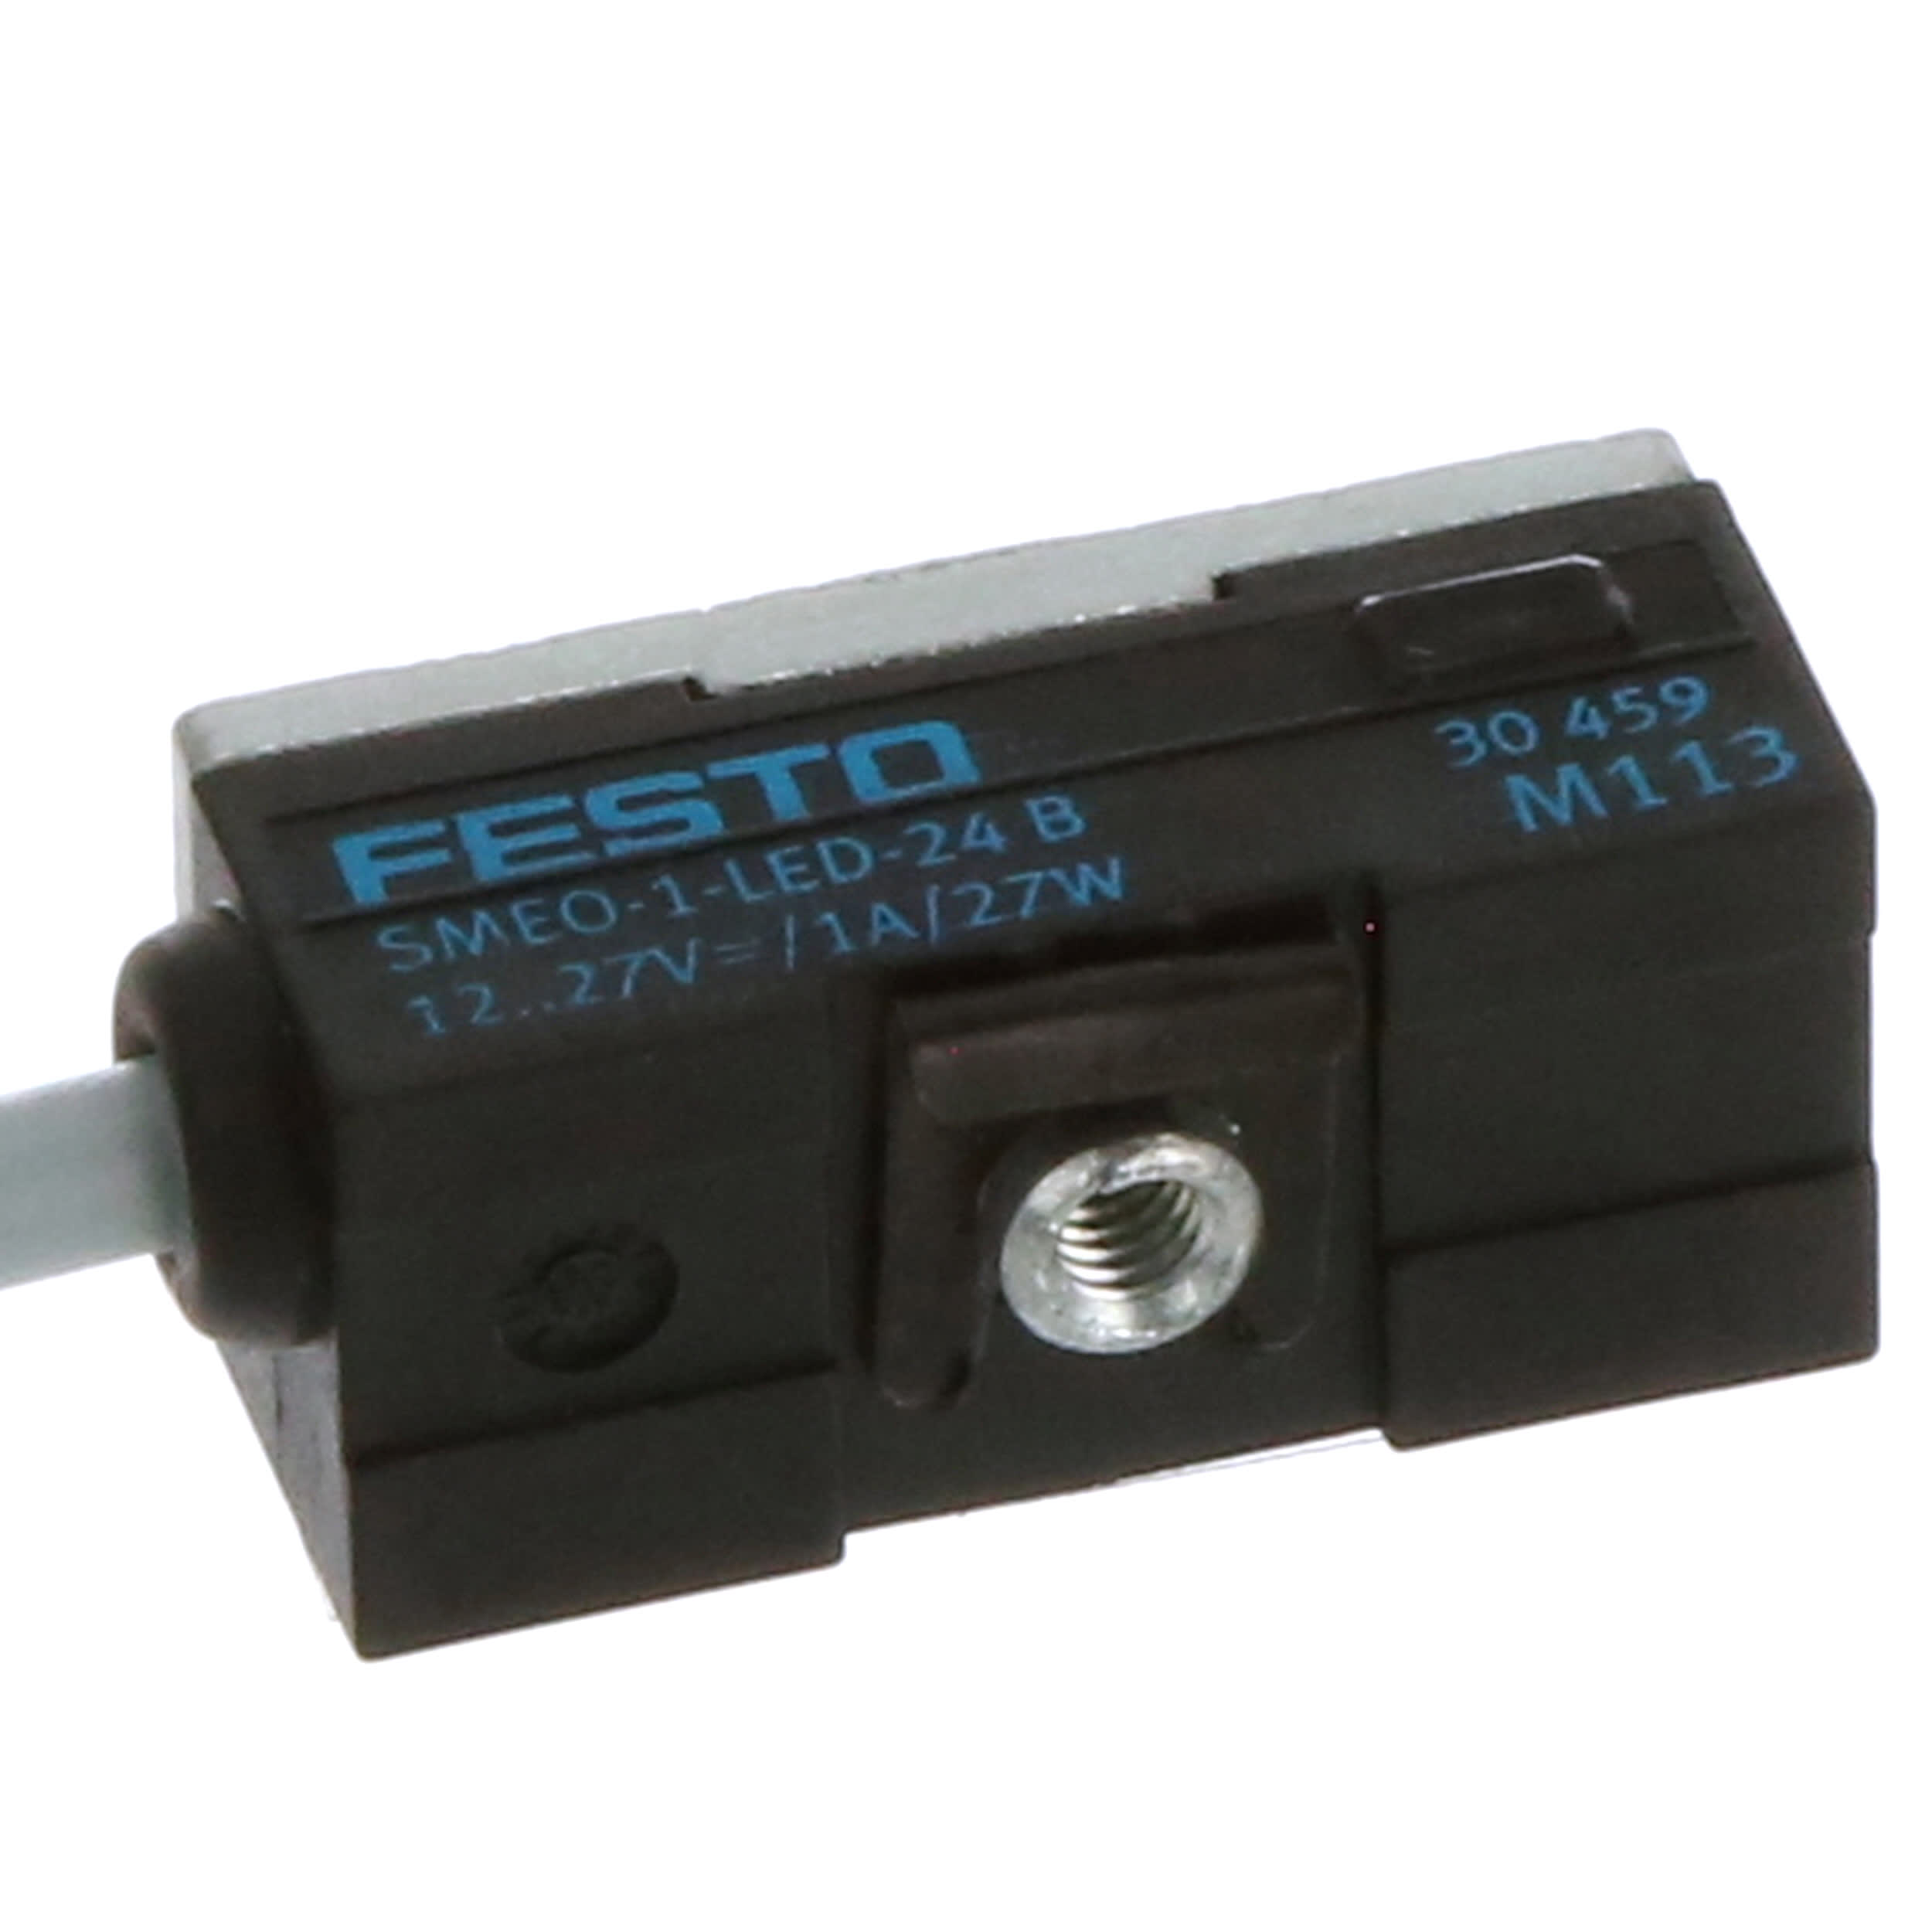 151 685 SMTO-1-PS-S-LED-24-C Festo Proximity Sensor PNP